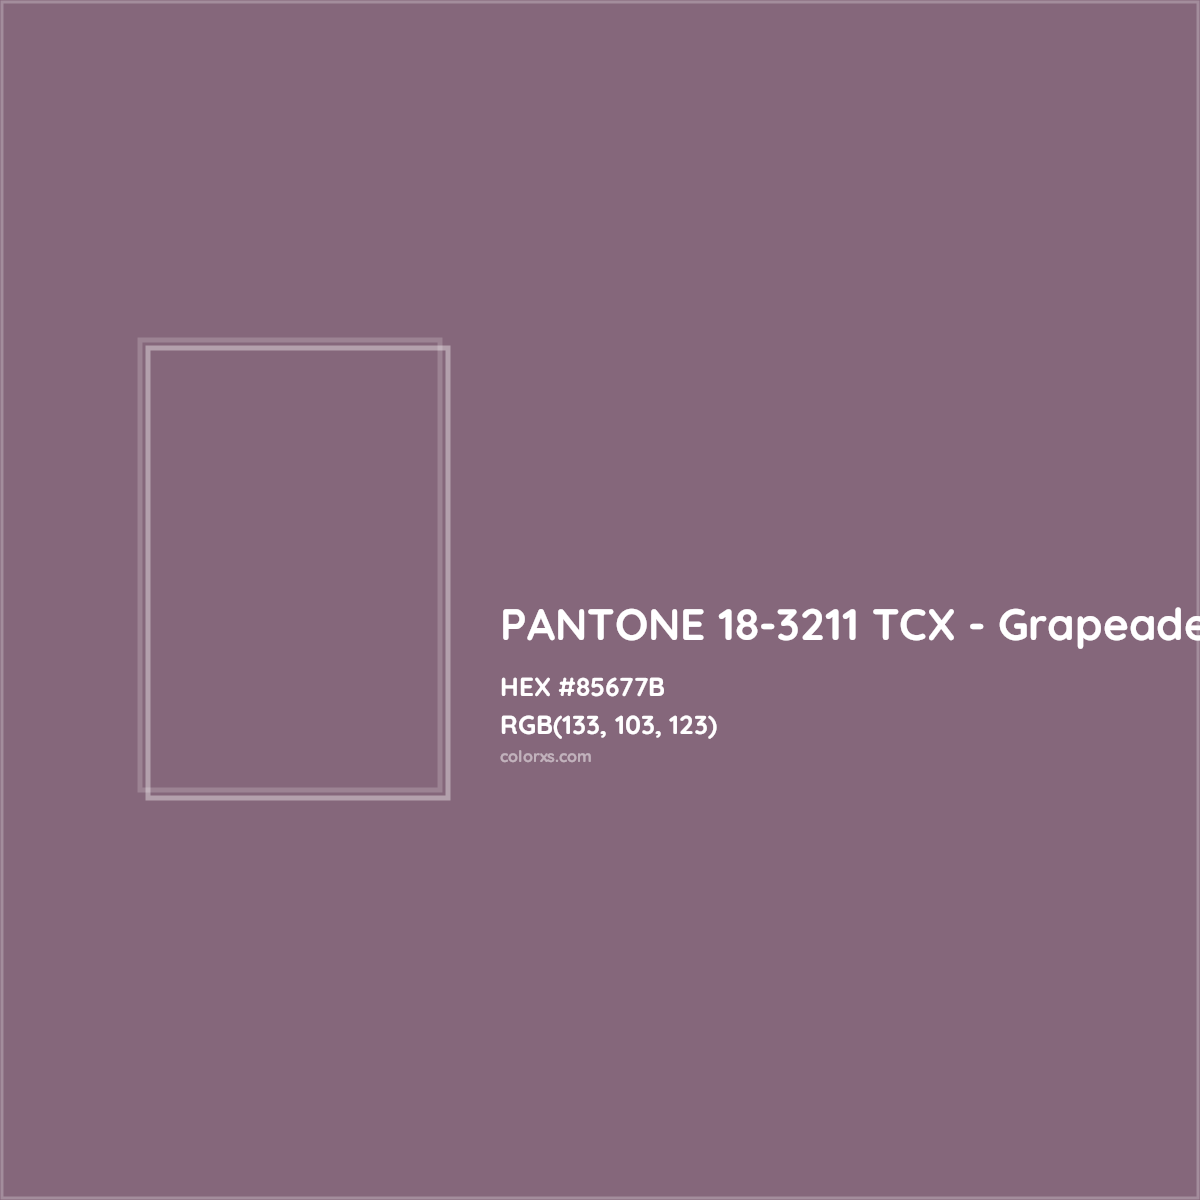 HEX #85677B PANTONE 18-3211 TCX - Grapeade CMS Pantone TCX - Color Code